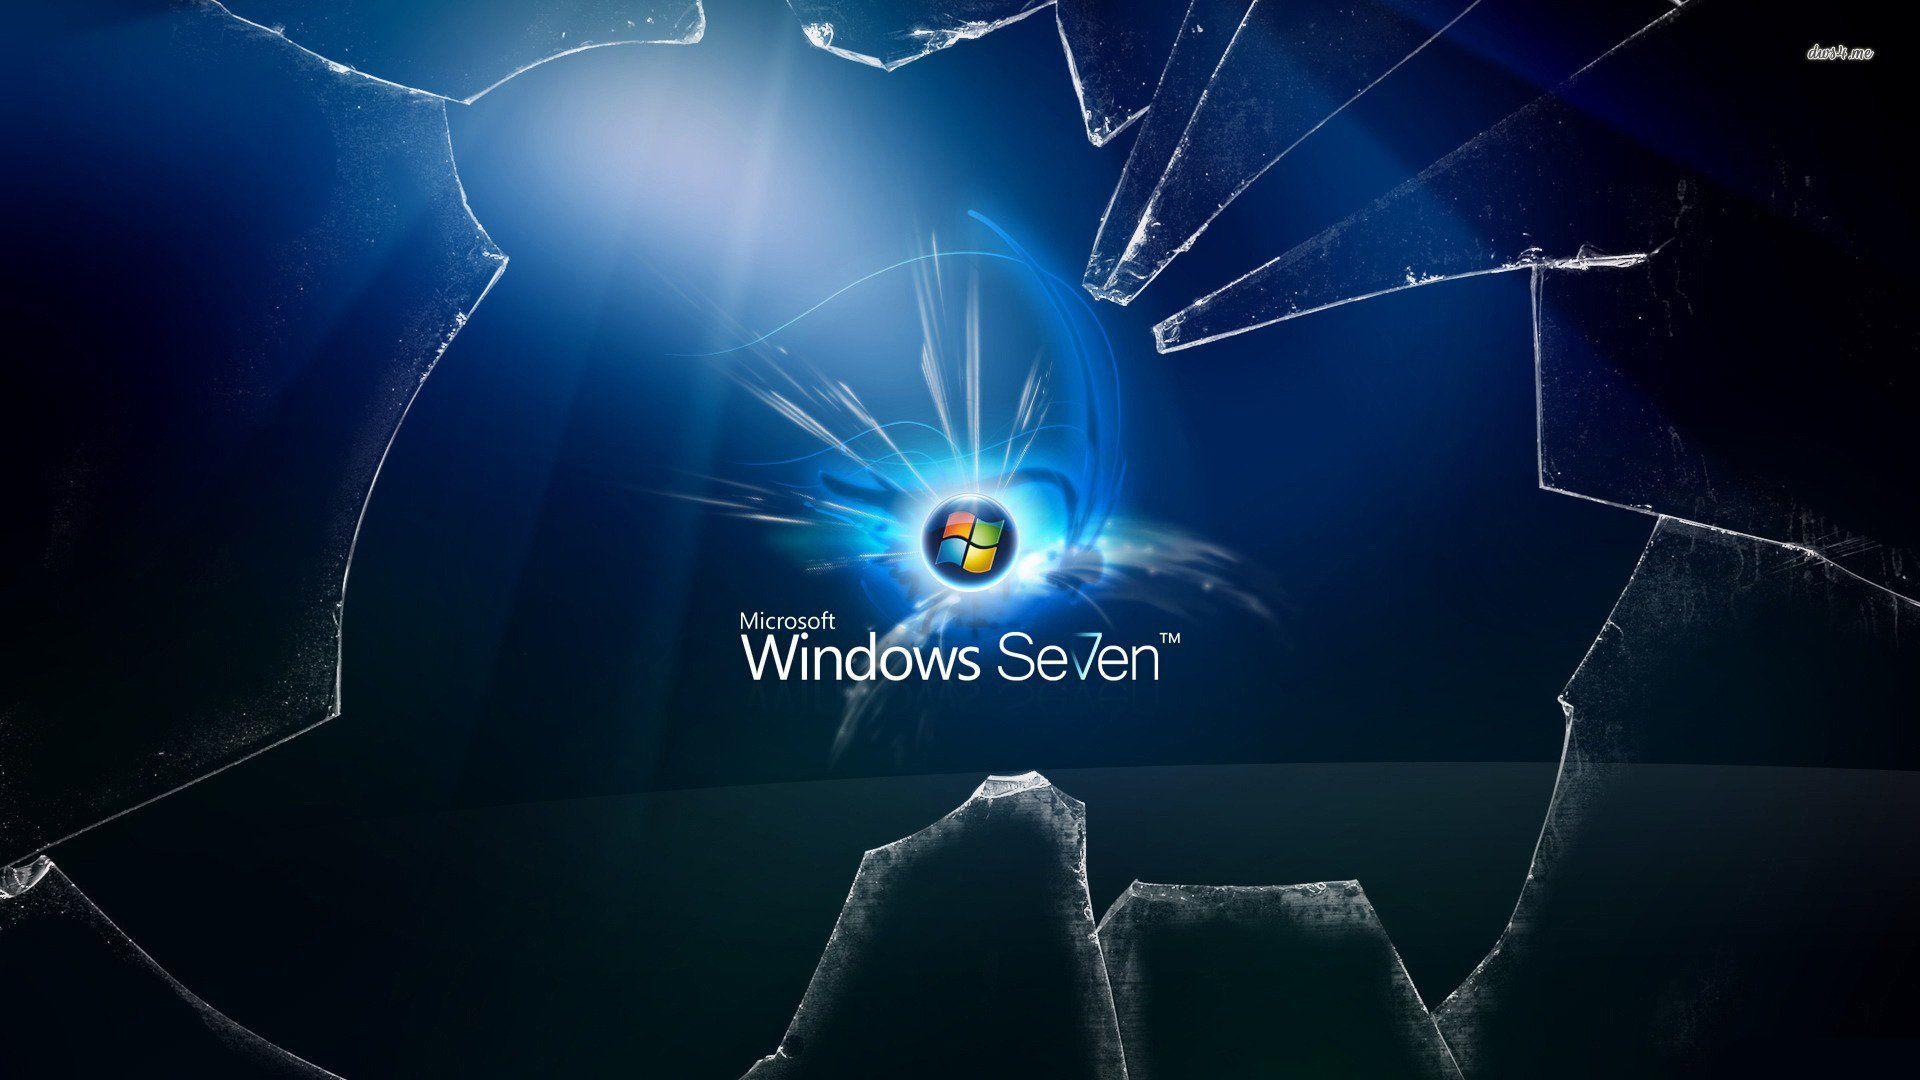 Windows 7 Logo Behind Broken Screen